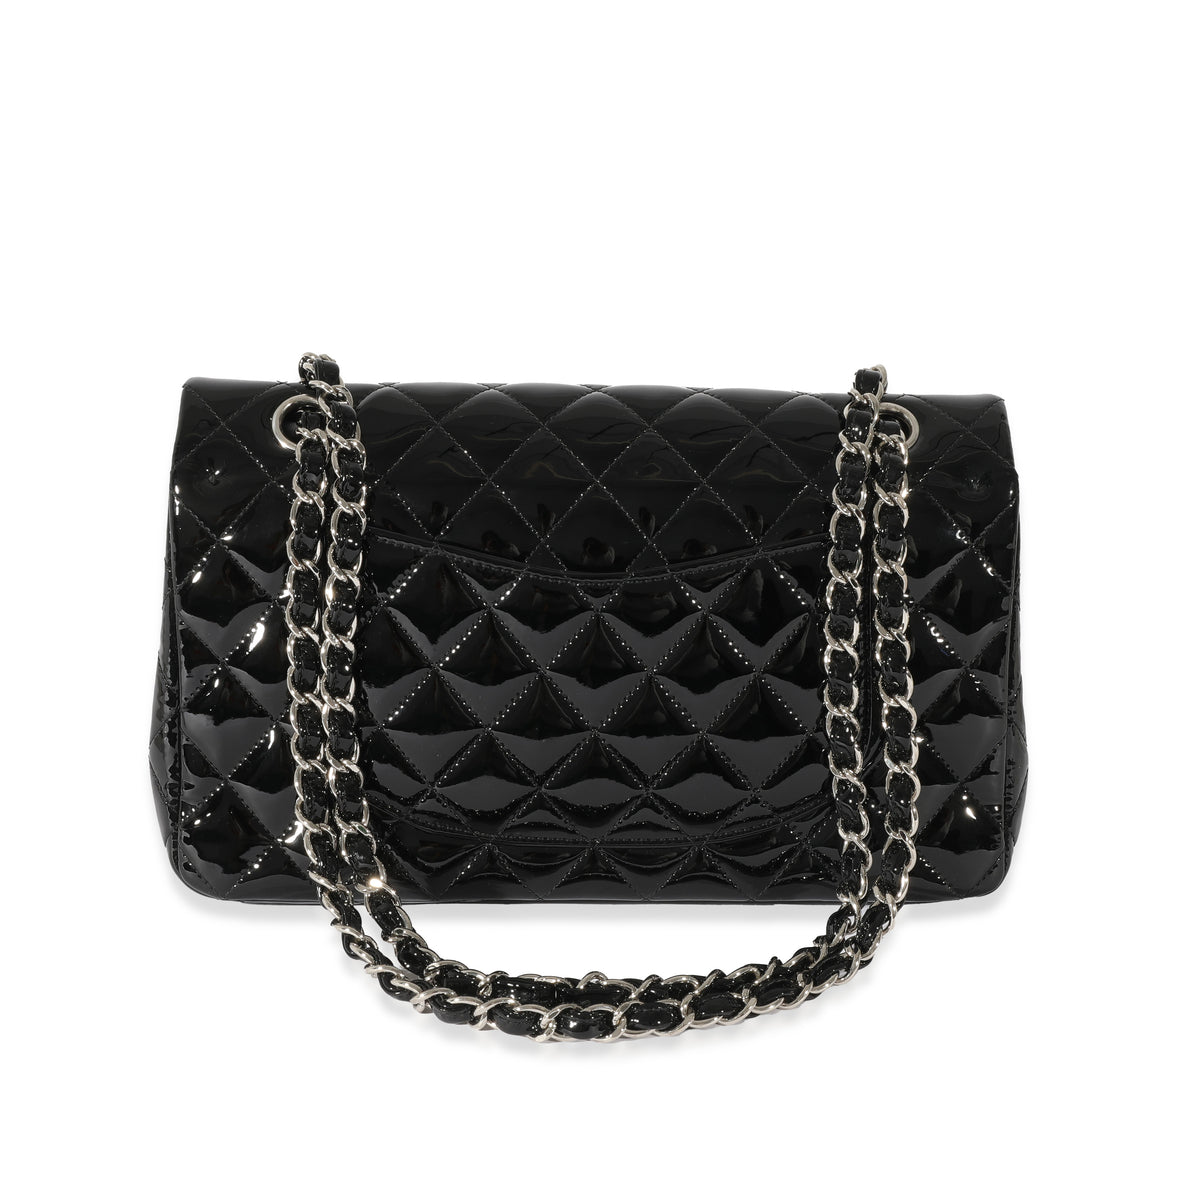 Chanel Black Patent Leather Classic Medium Double Flap Bag